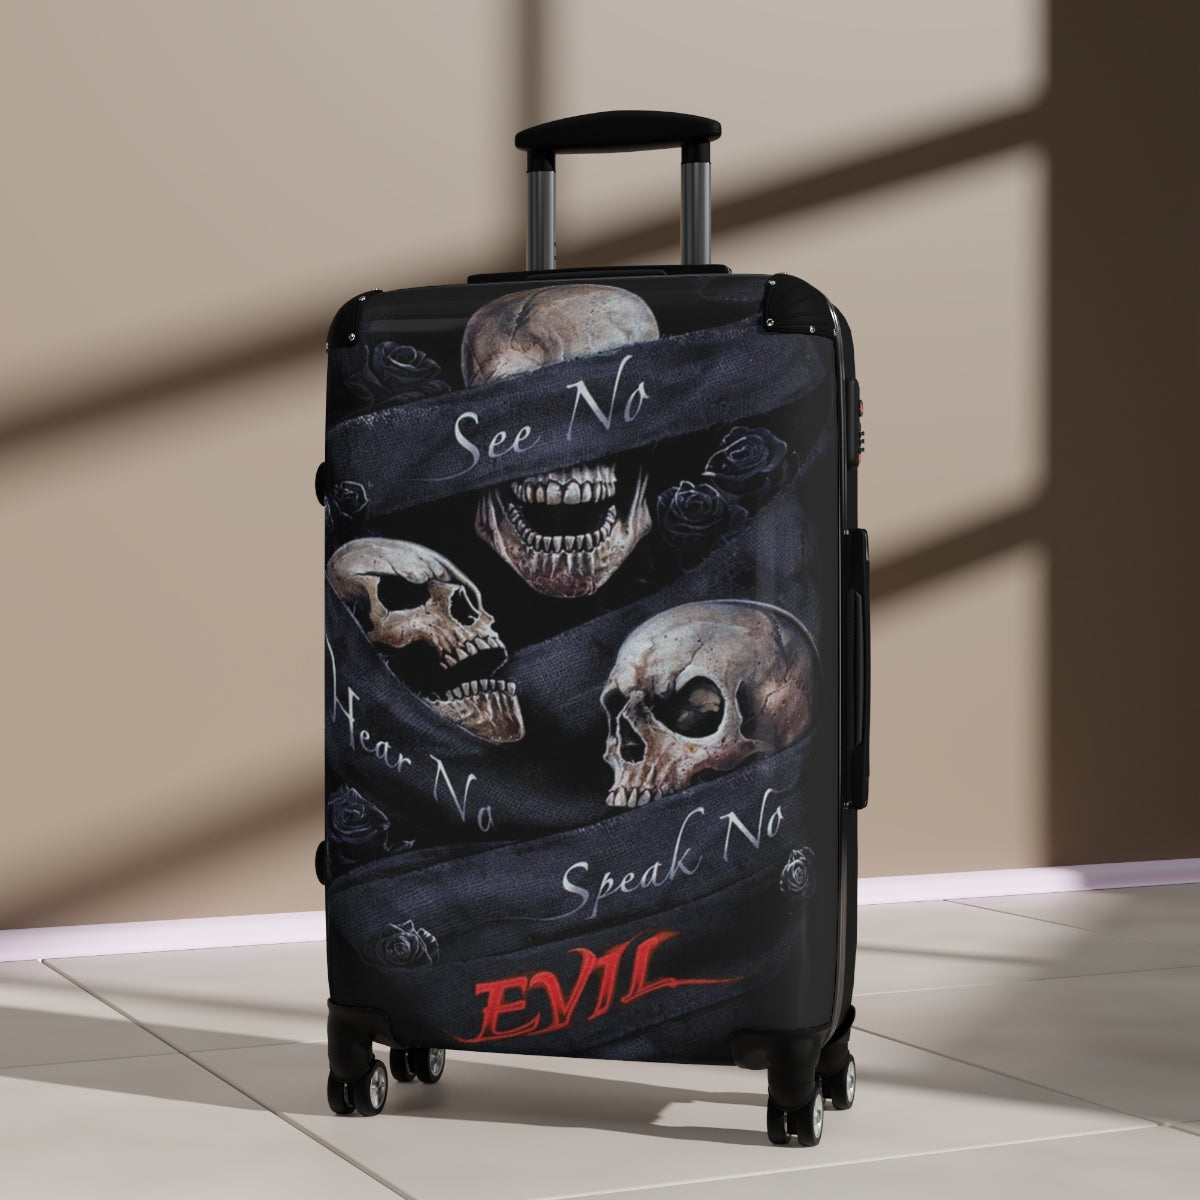 No see no hear no speak evils skull Suitcases Luggage